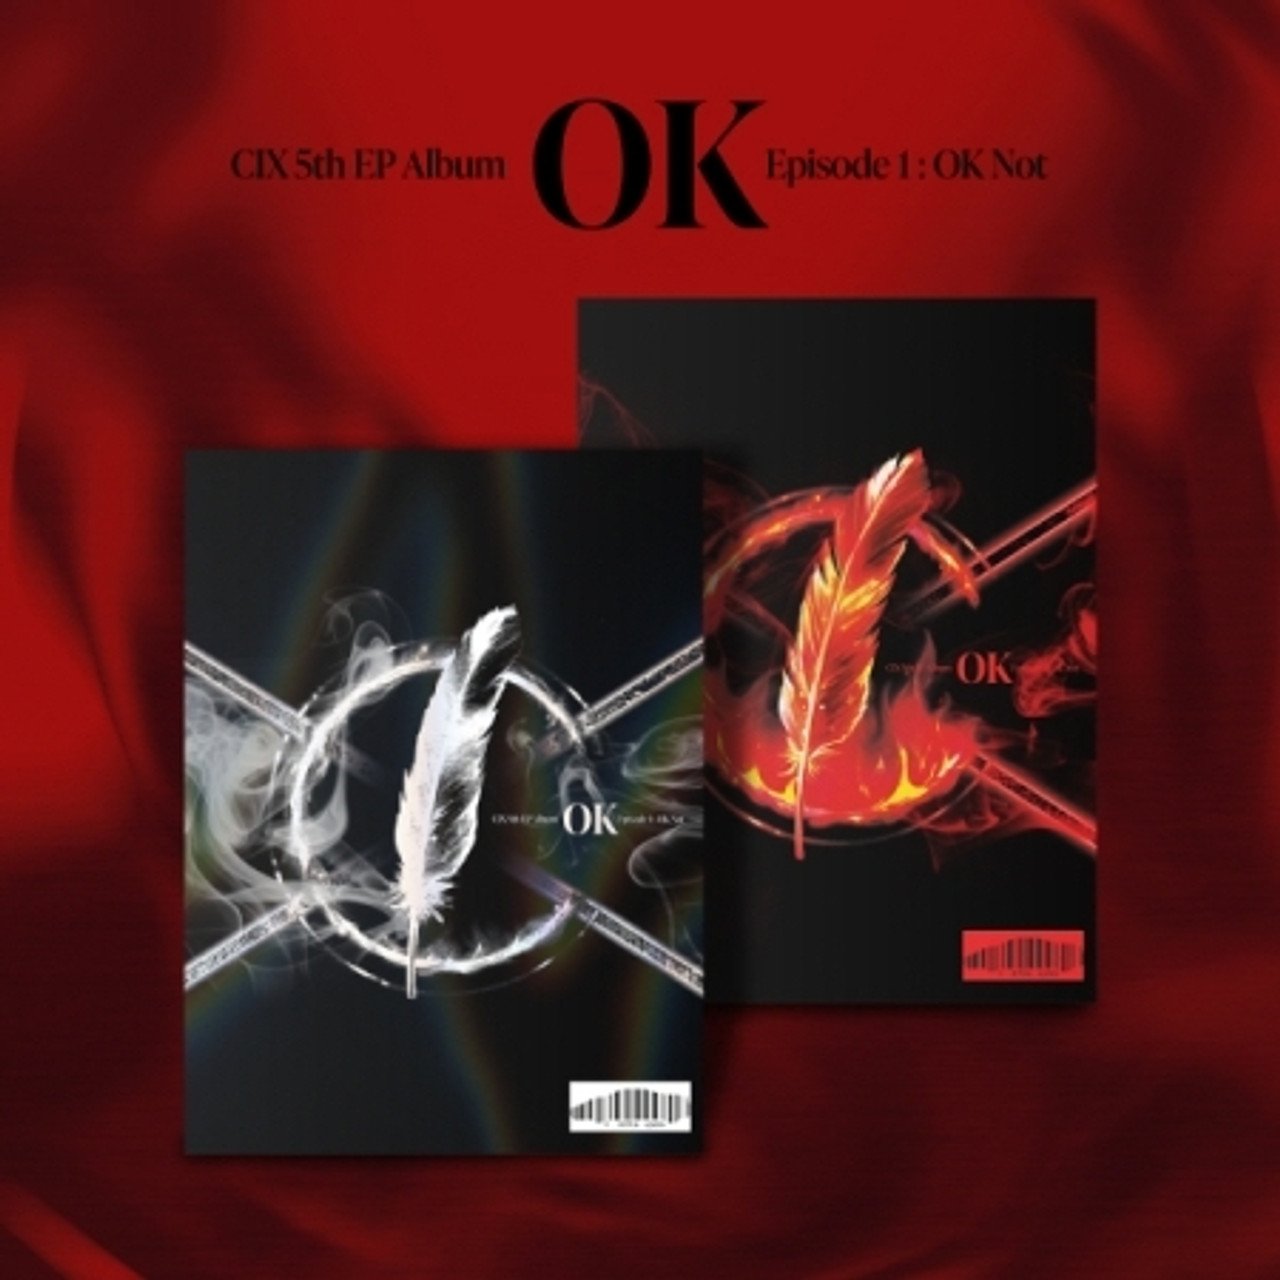 CD Shop - CIX OK EPISODE 1: OK NOT